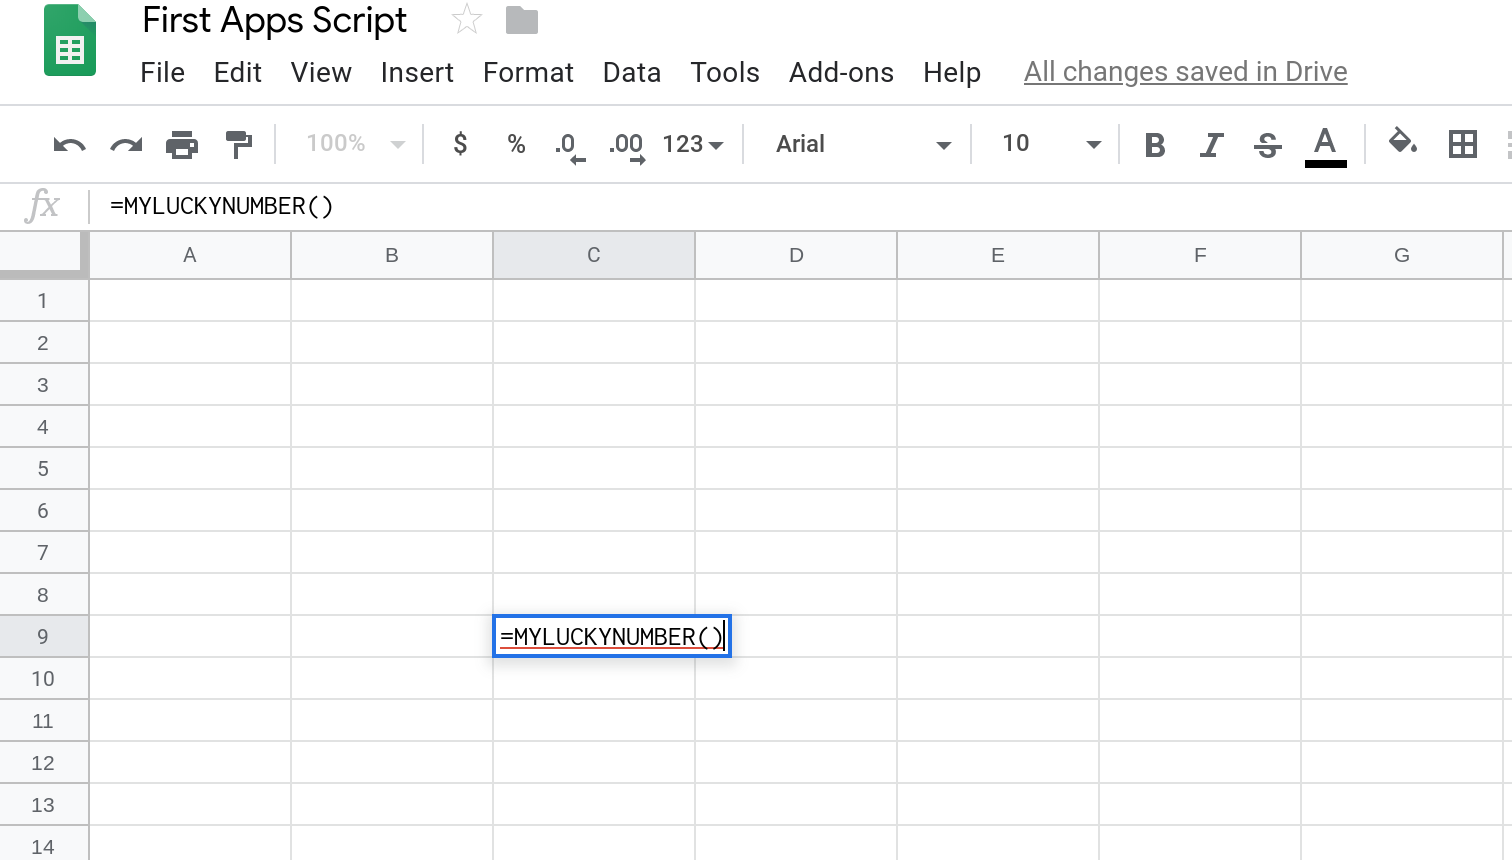 Screenshot of a Google Sheets spreadsheet.